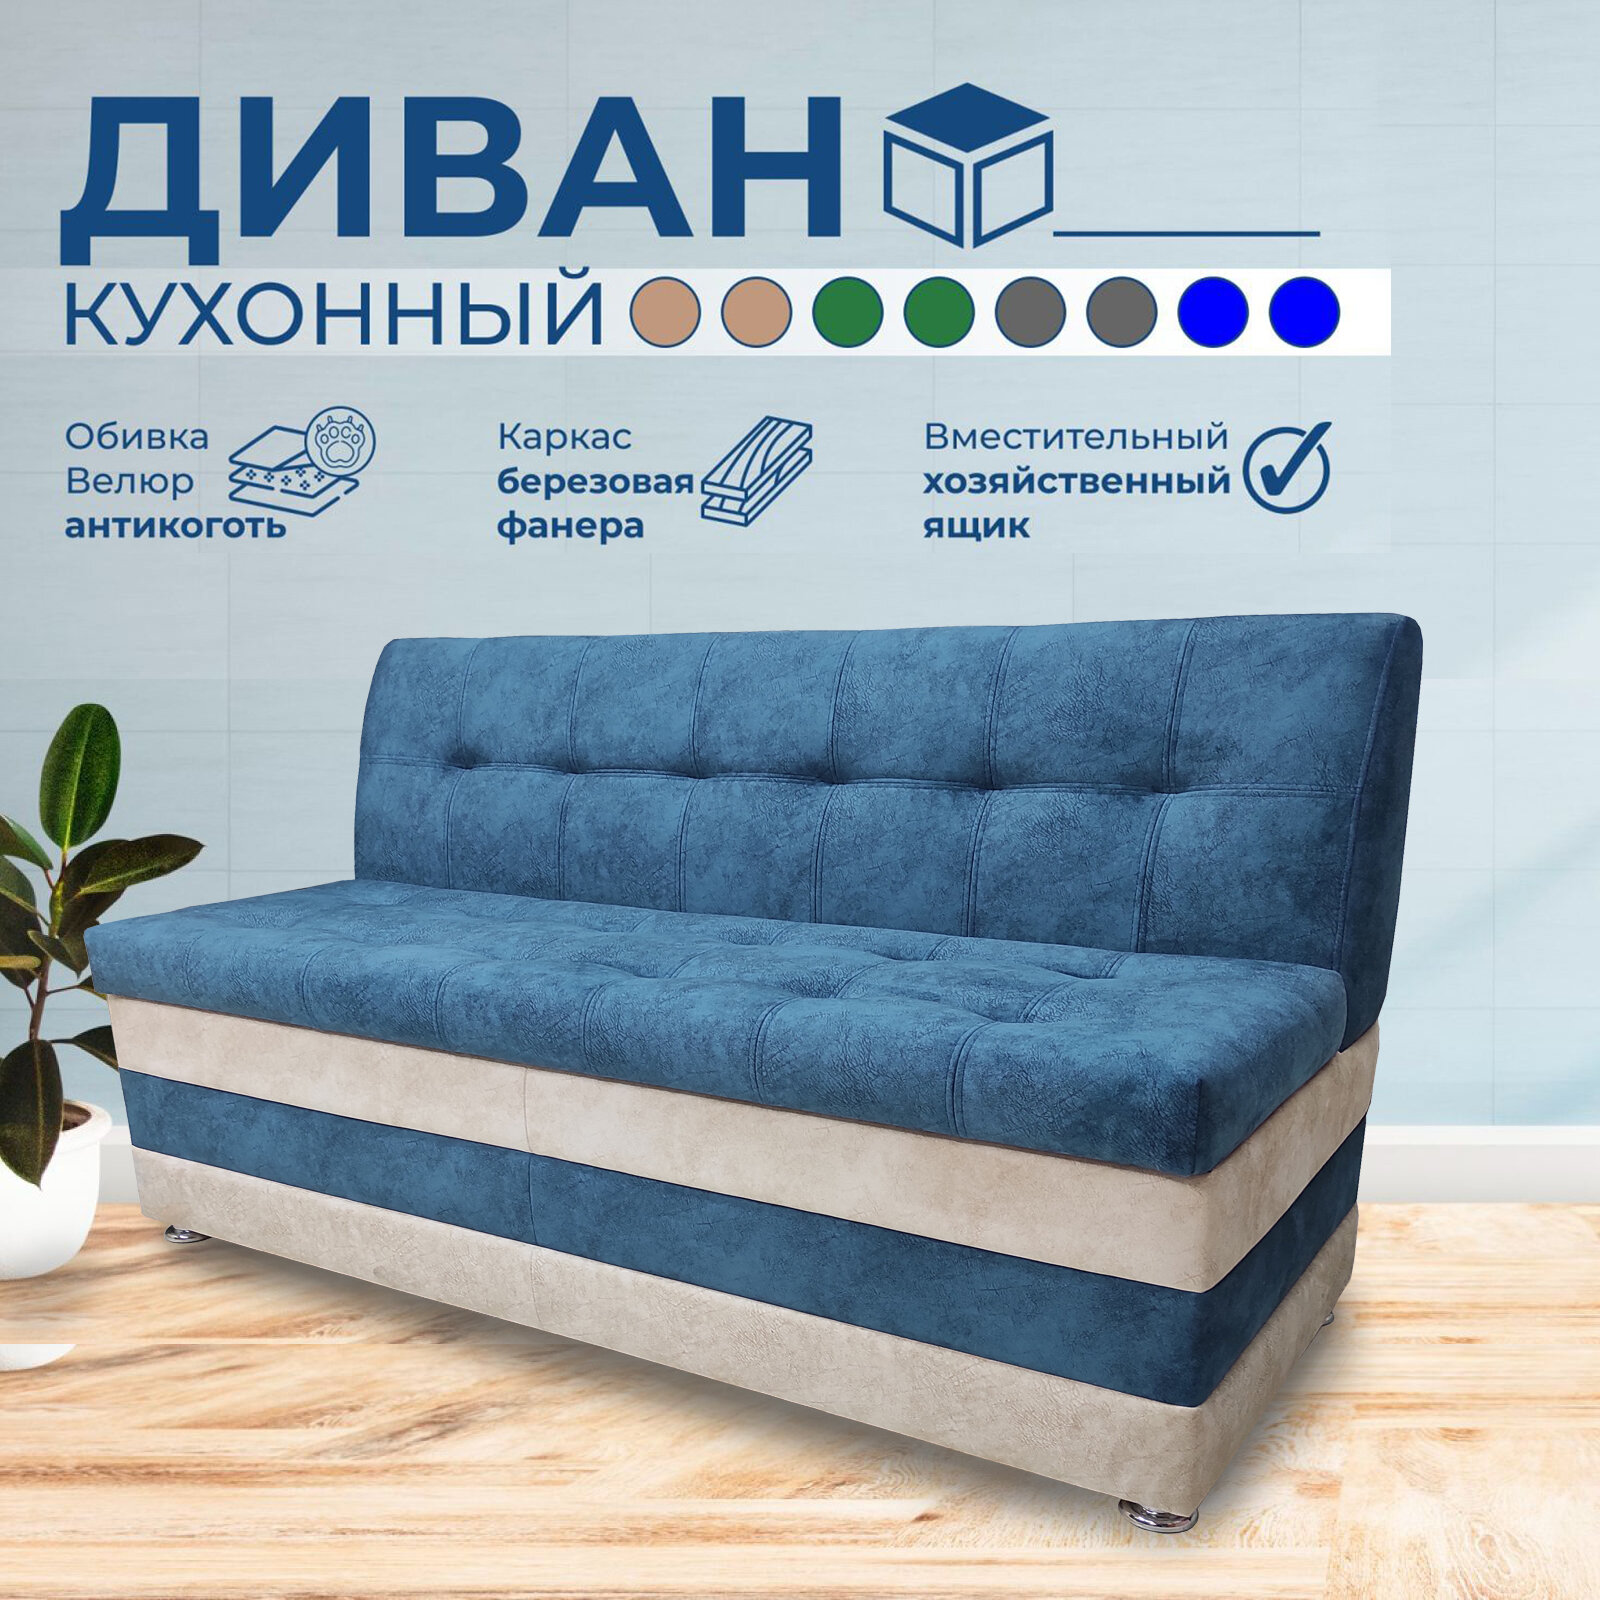 Кухонный диван Форум-5М (140см) Синий